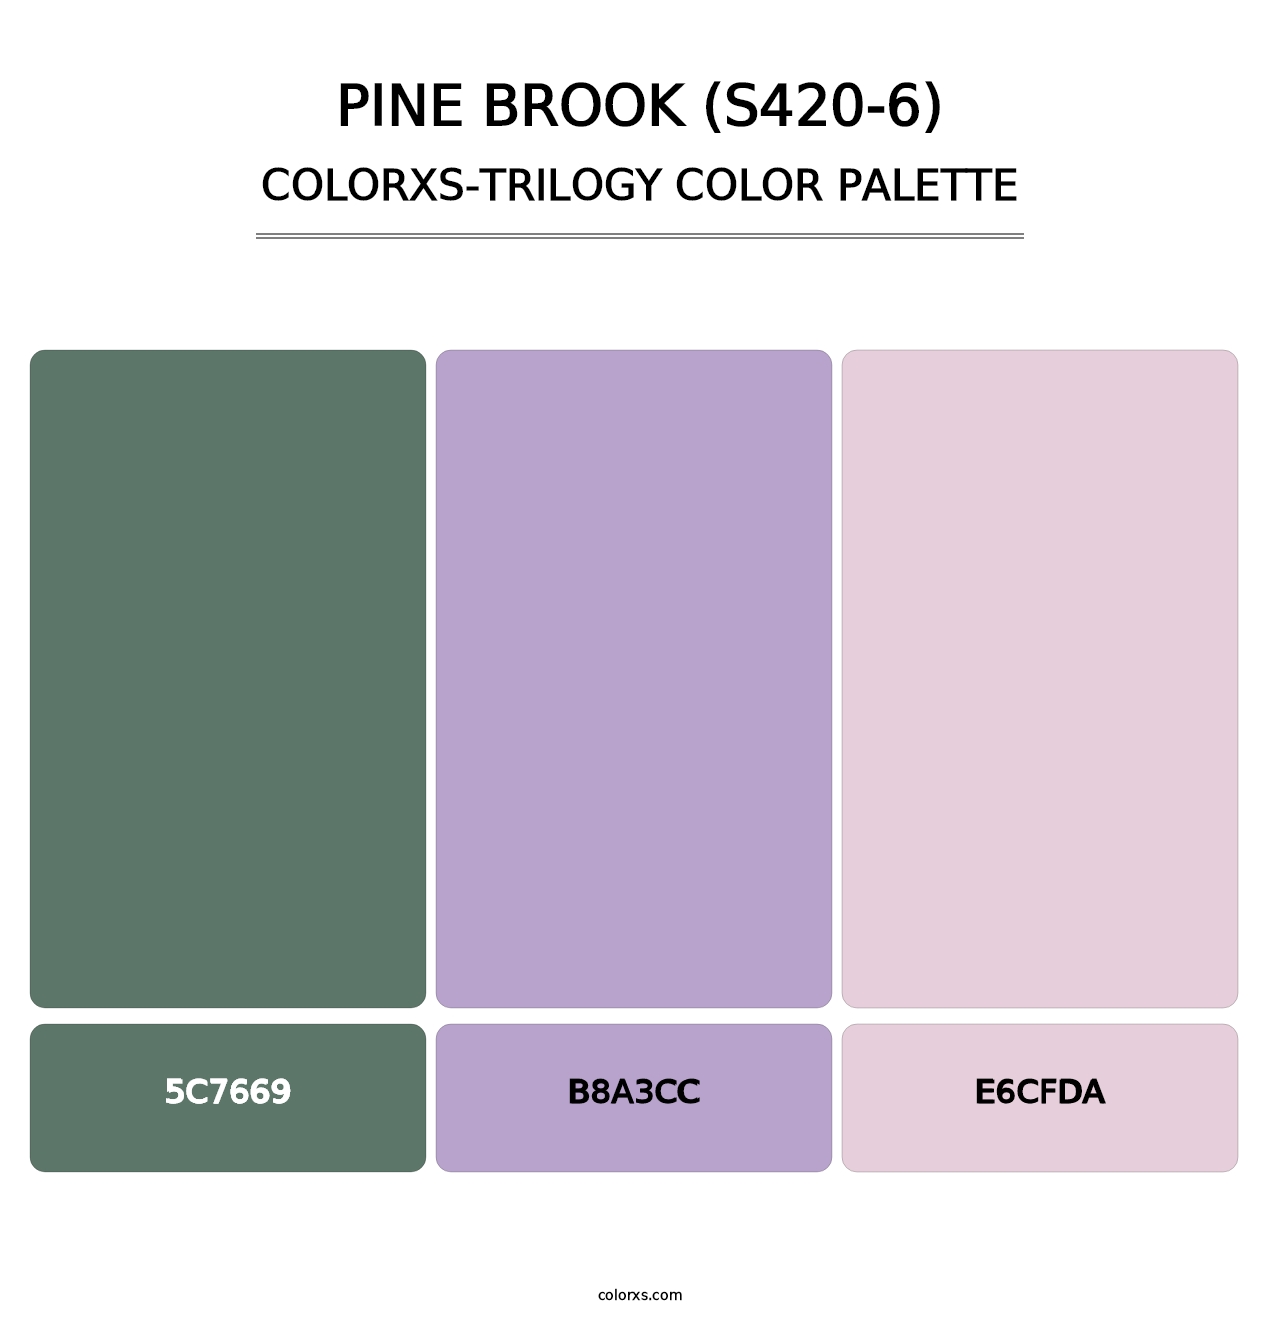 Pine Brook (S420-6) - Colorxs Trilogy Palette